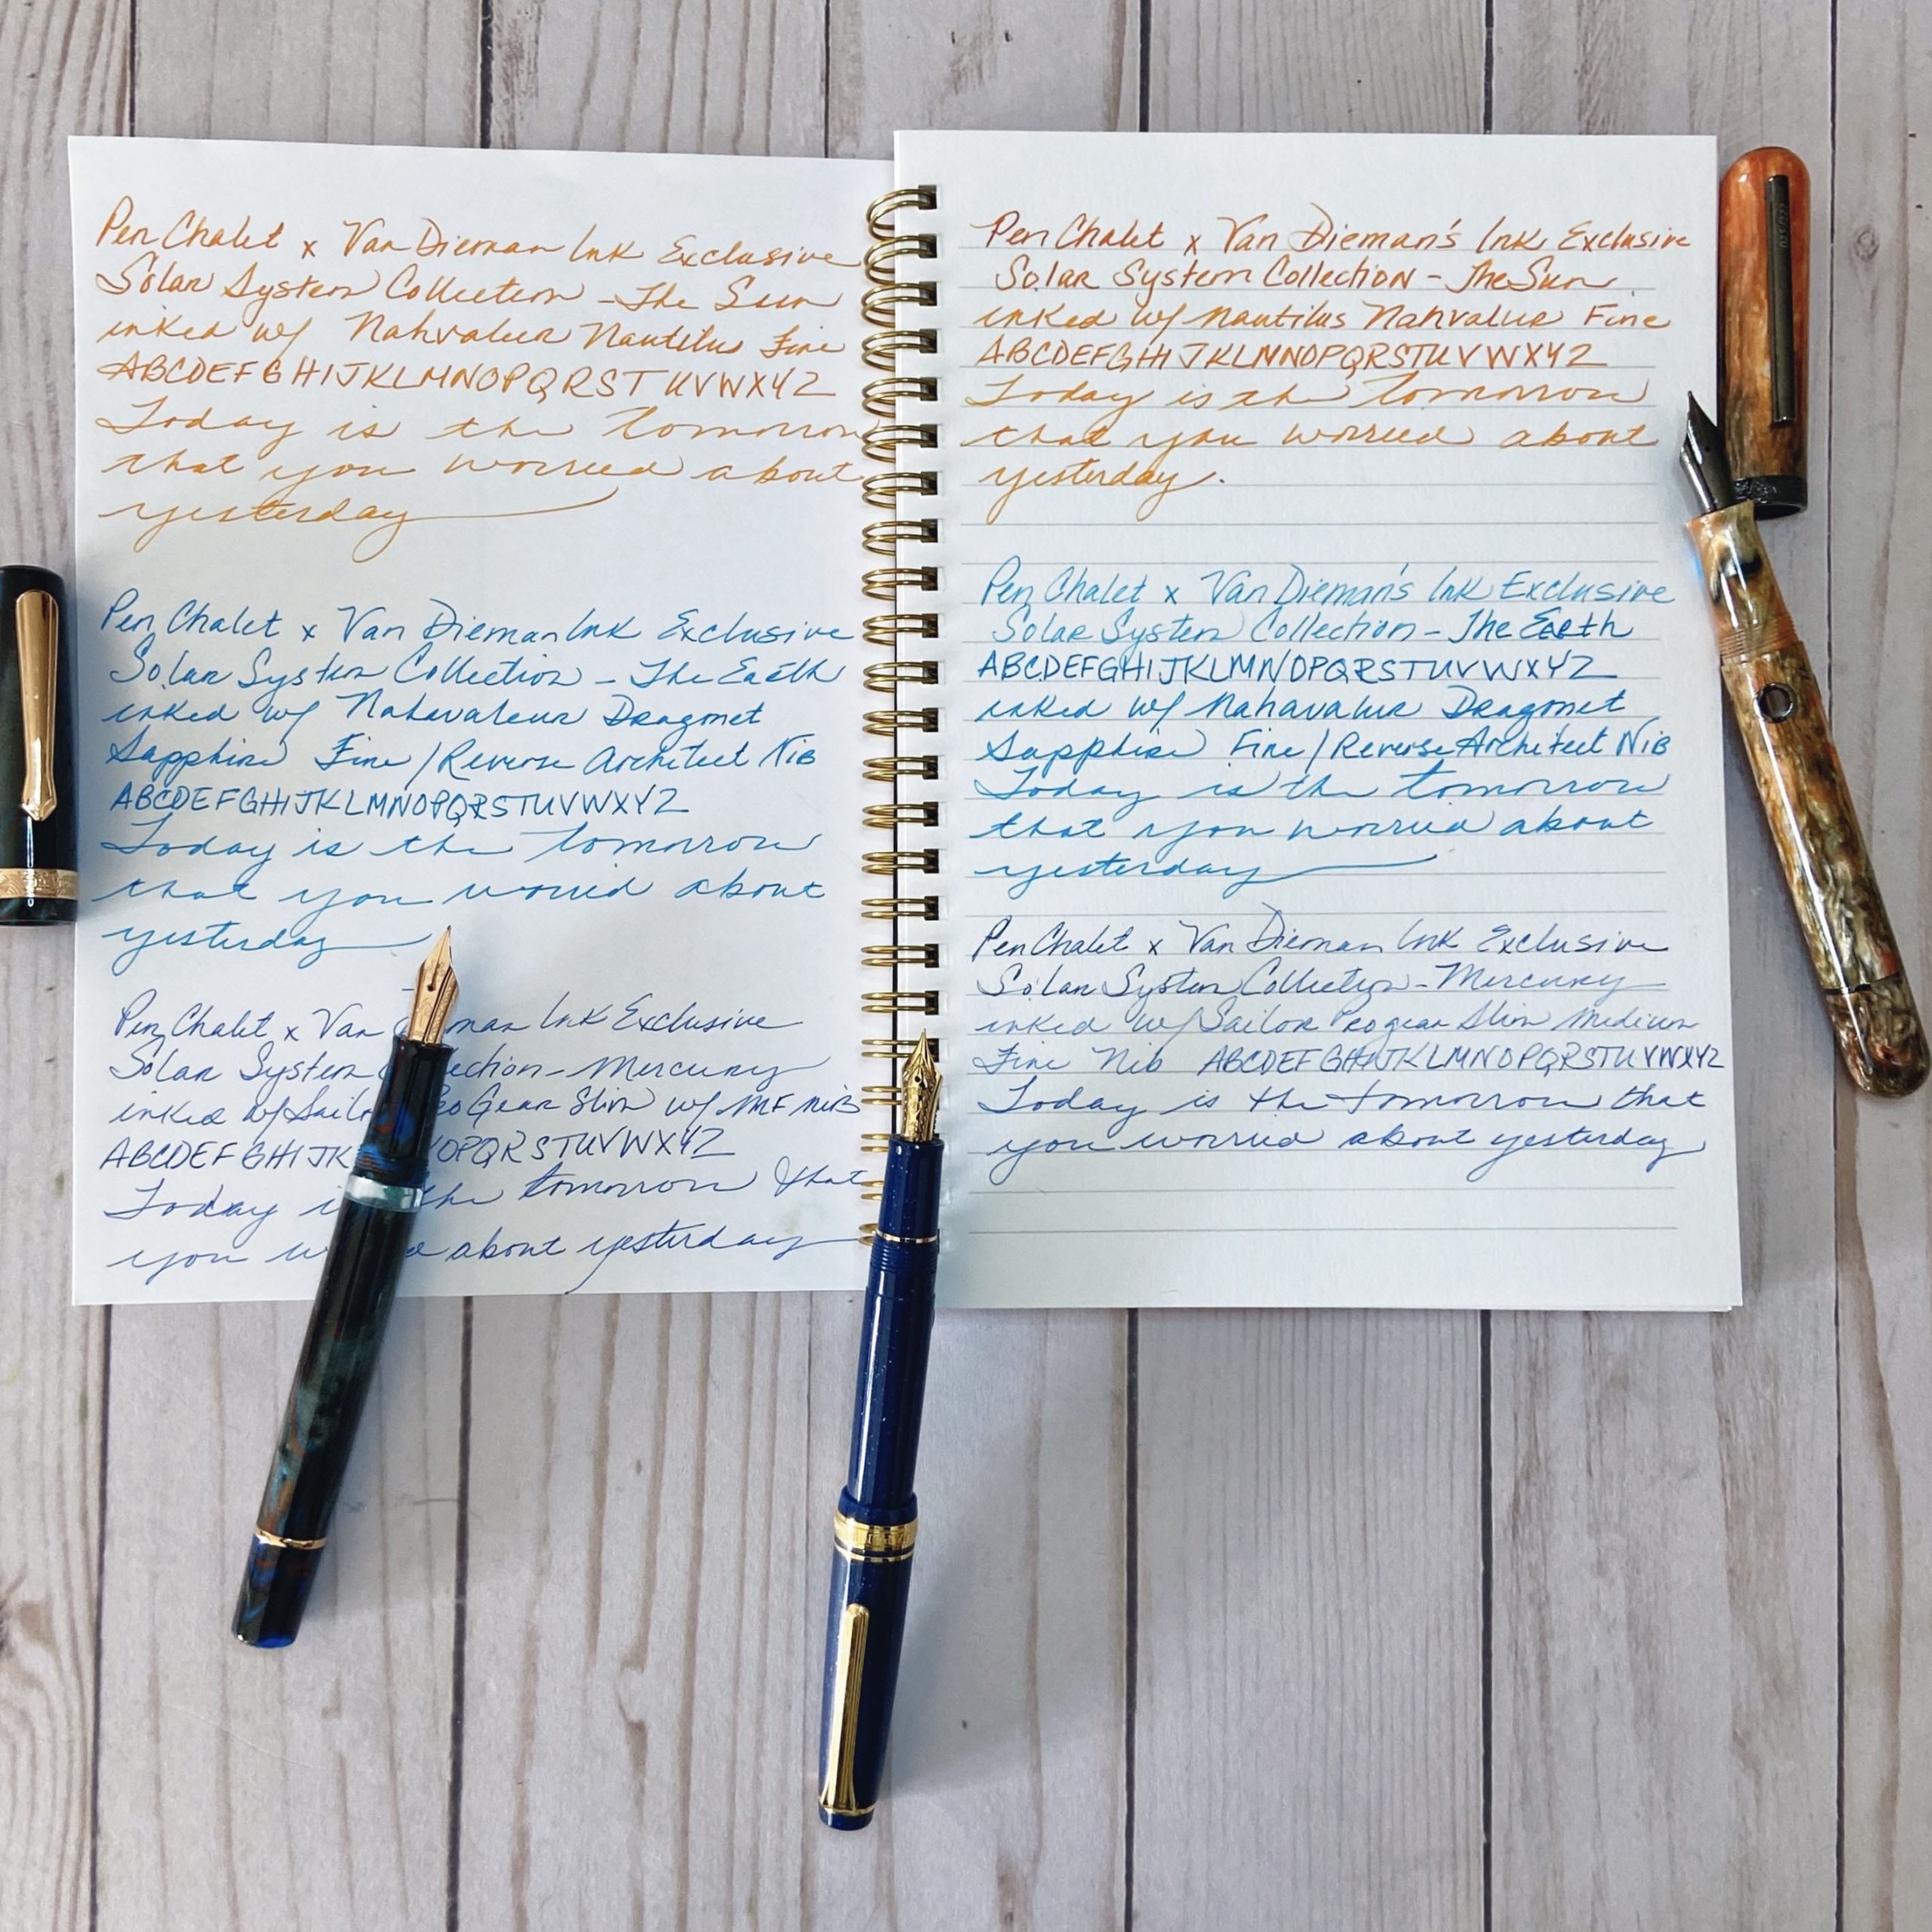 Favorite Orange Fountain Pen Inks: Orange Ink Comparison - Pen Chalet